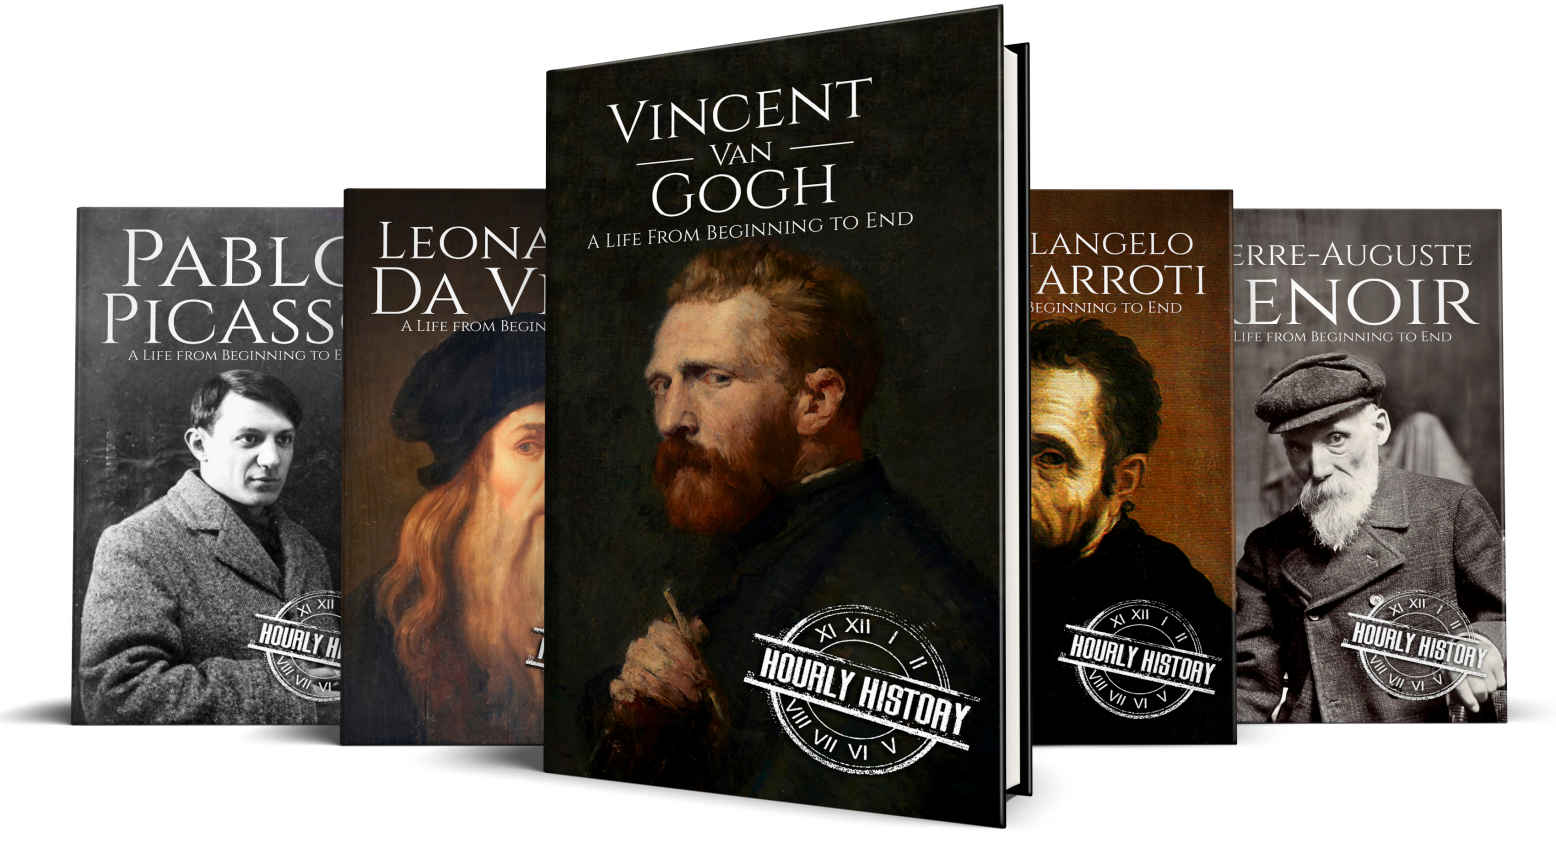 Biographies of Artists: Vincent van Gogh, Leonardo da Vinci, Michelangelo Buonarroti, Pierre-Auguste Renoir, Pablo Picasso